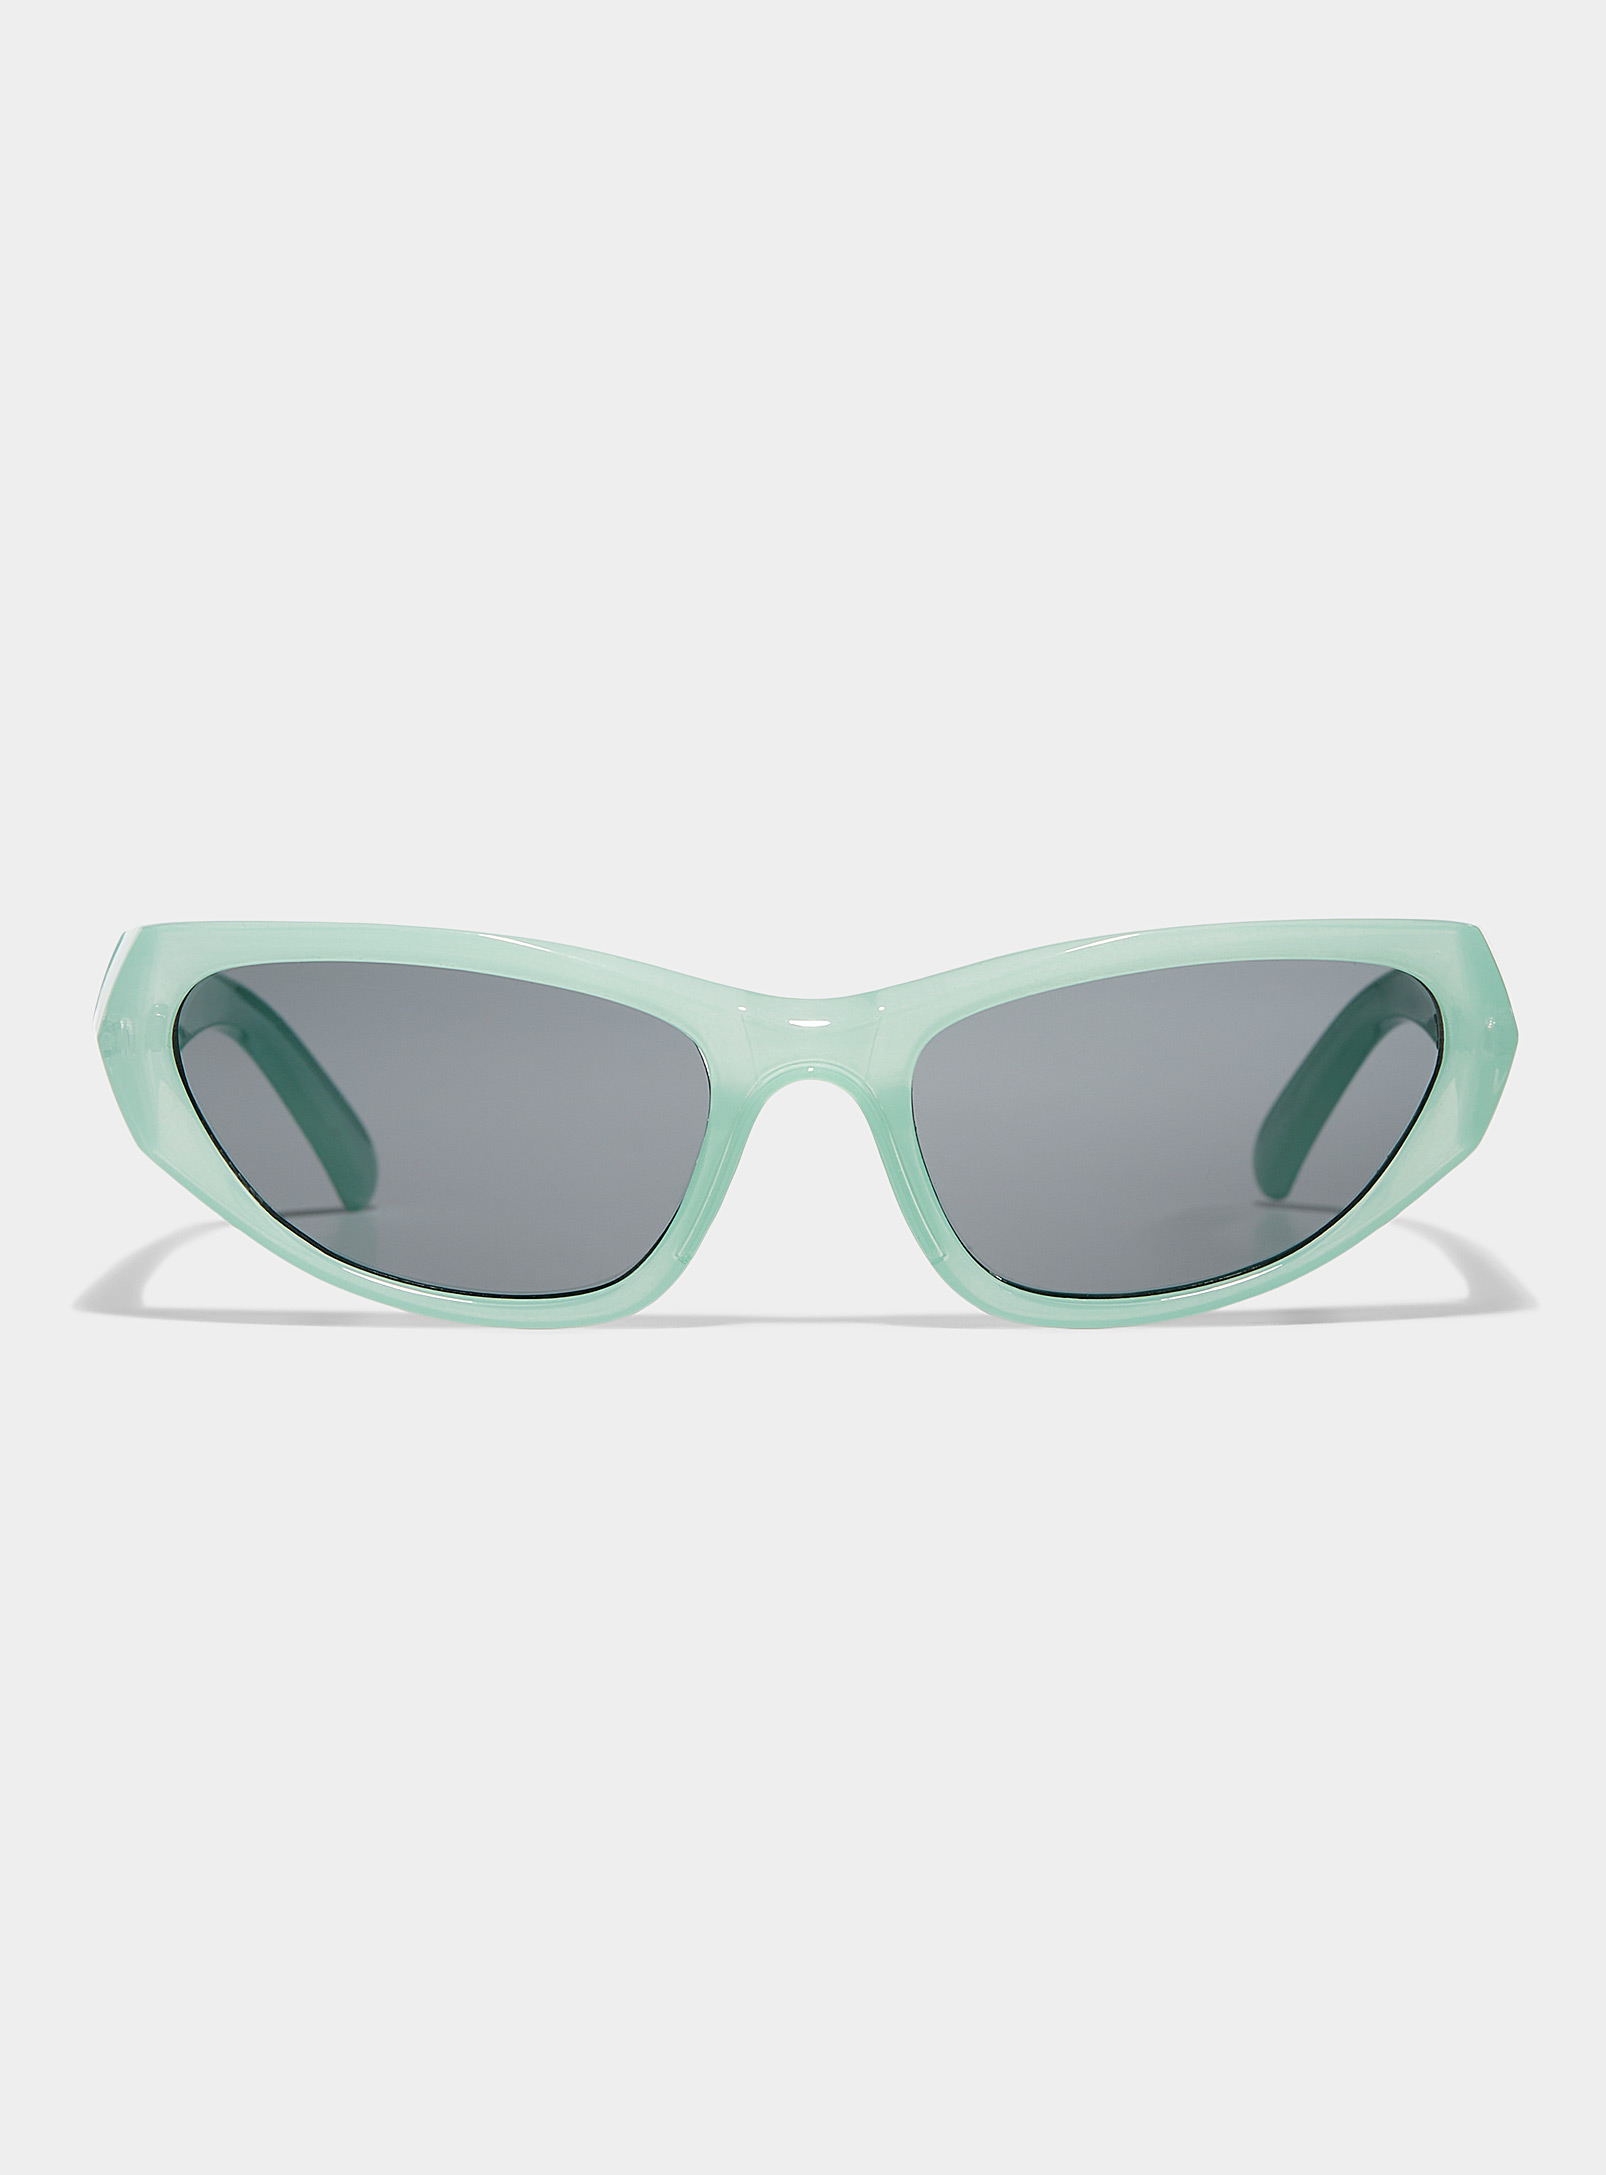 Le 31 Wallen Translucent Oval Sunglasses In Green